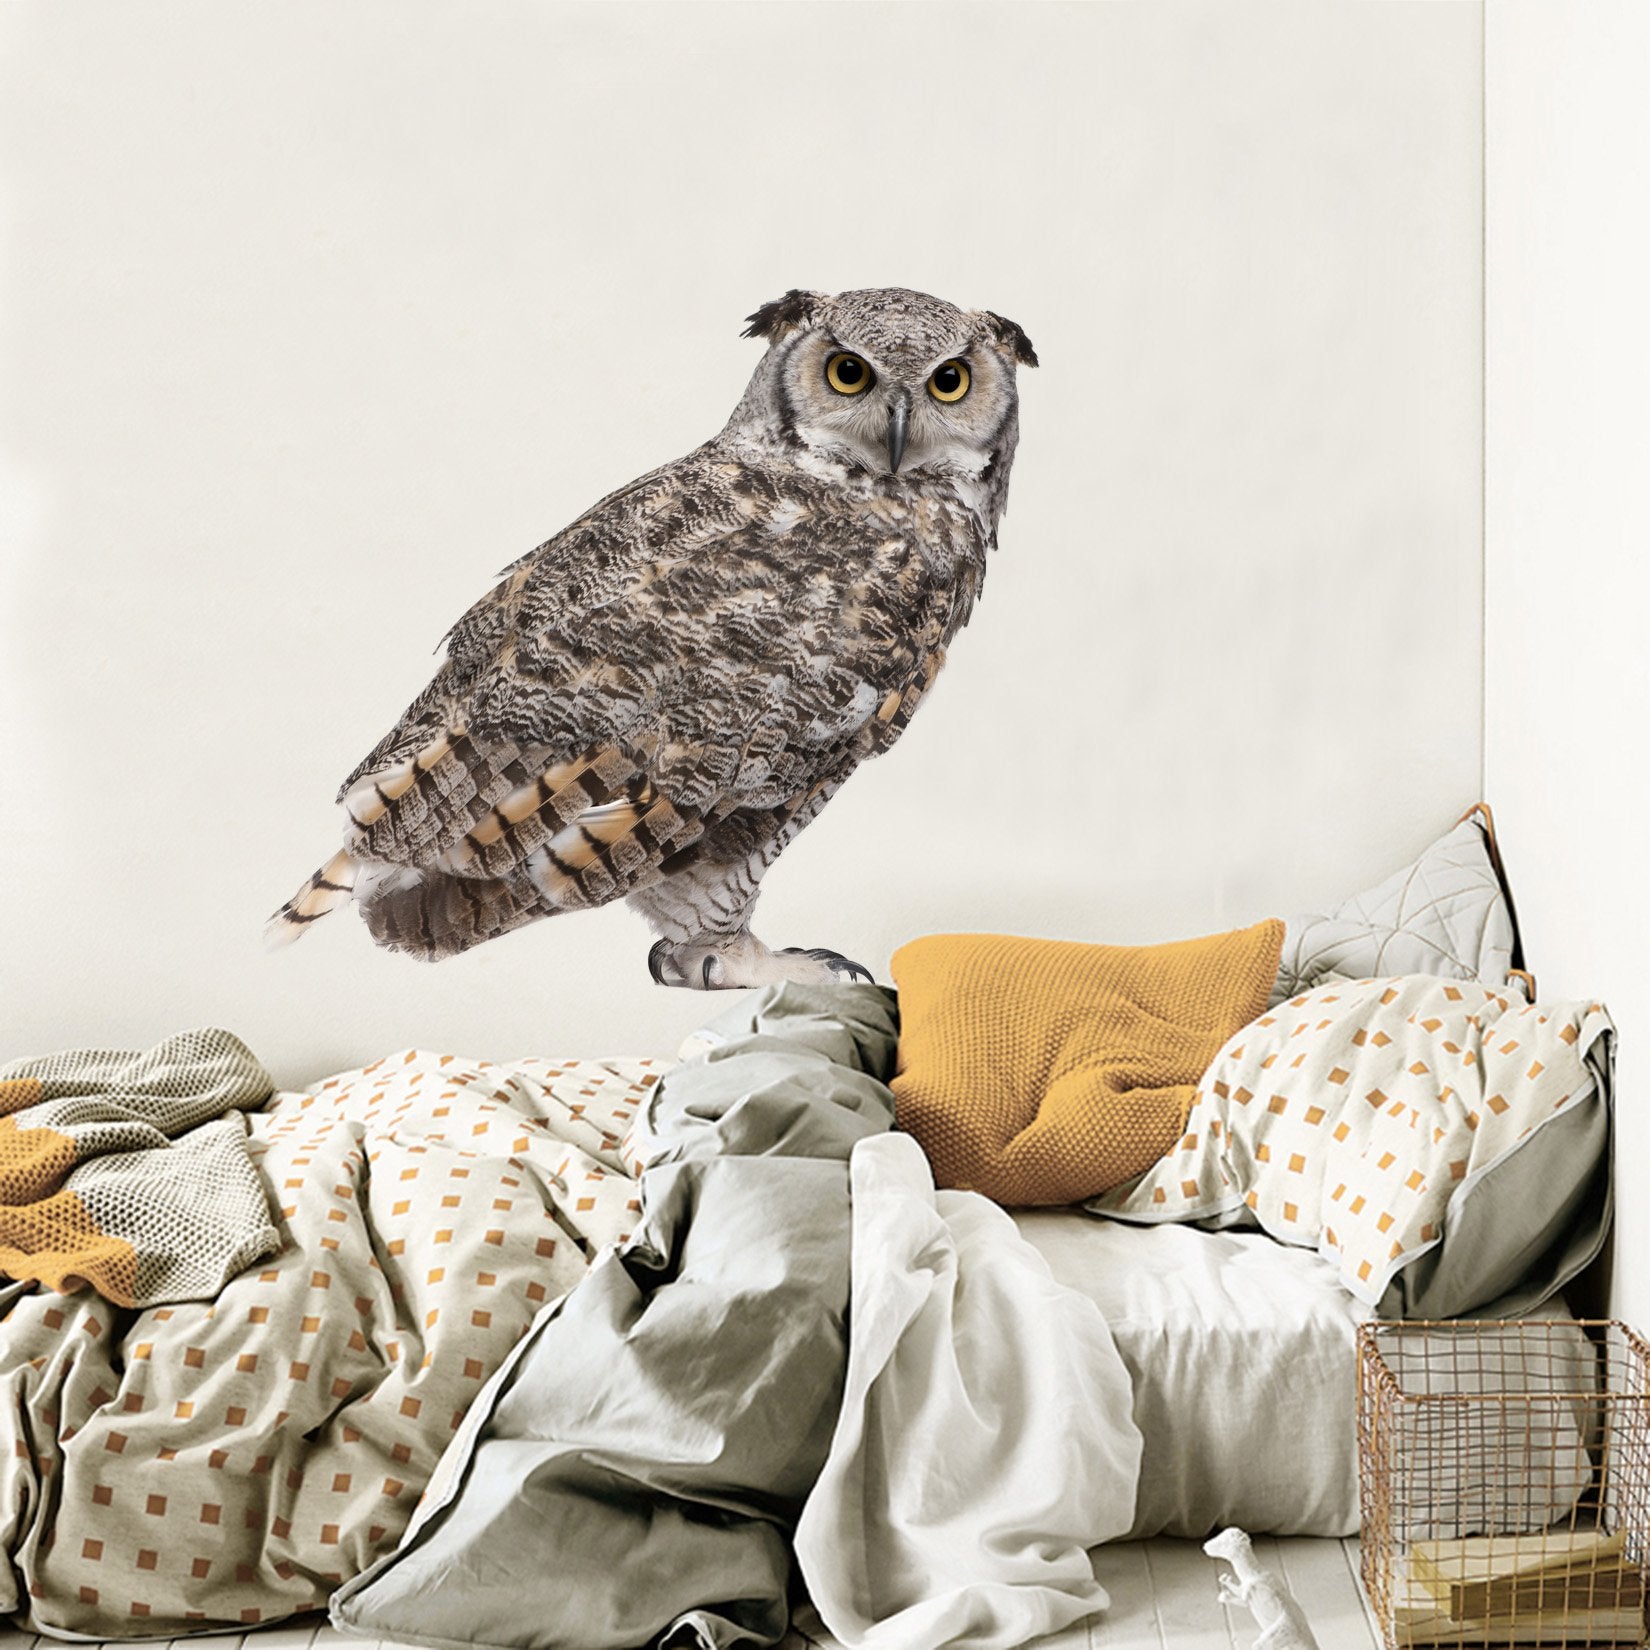 3D Owl 206 Animals Wall Stickers Wallpaper AJ Wallpaper 